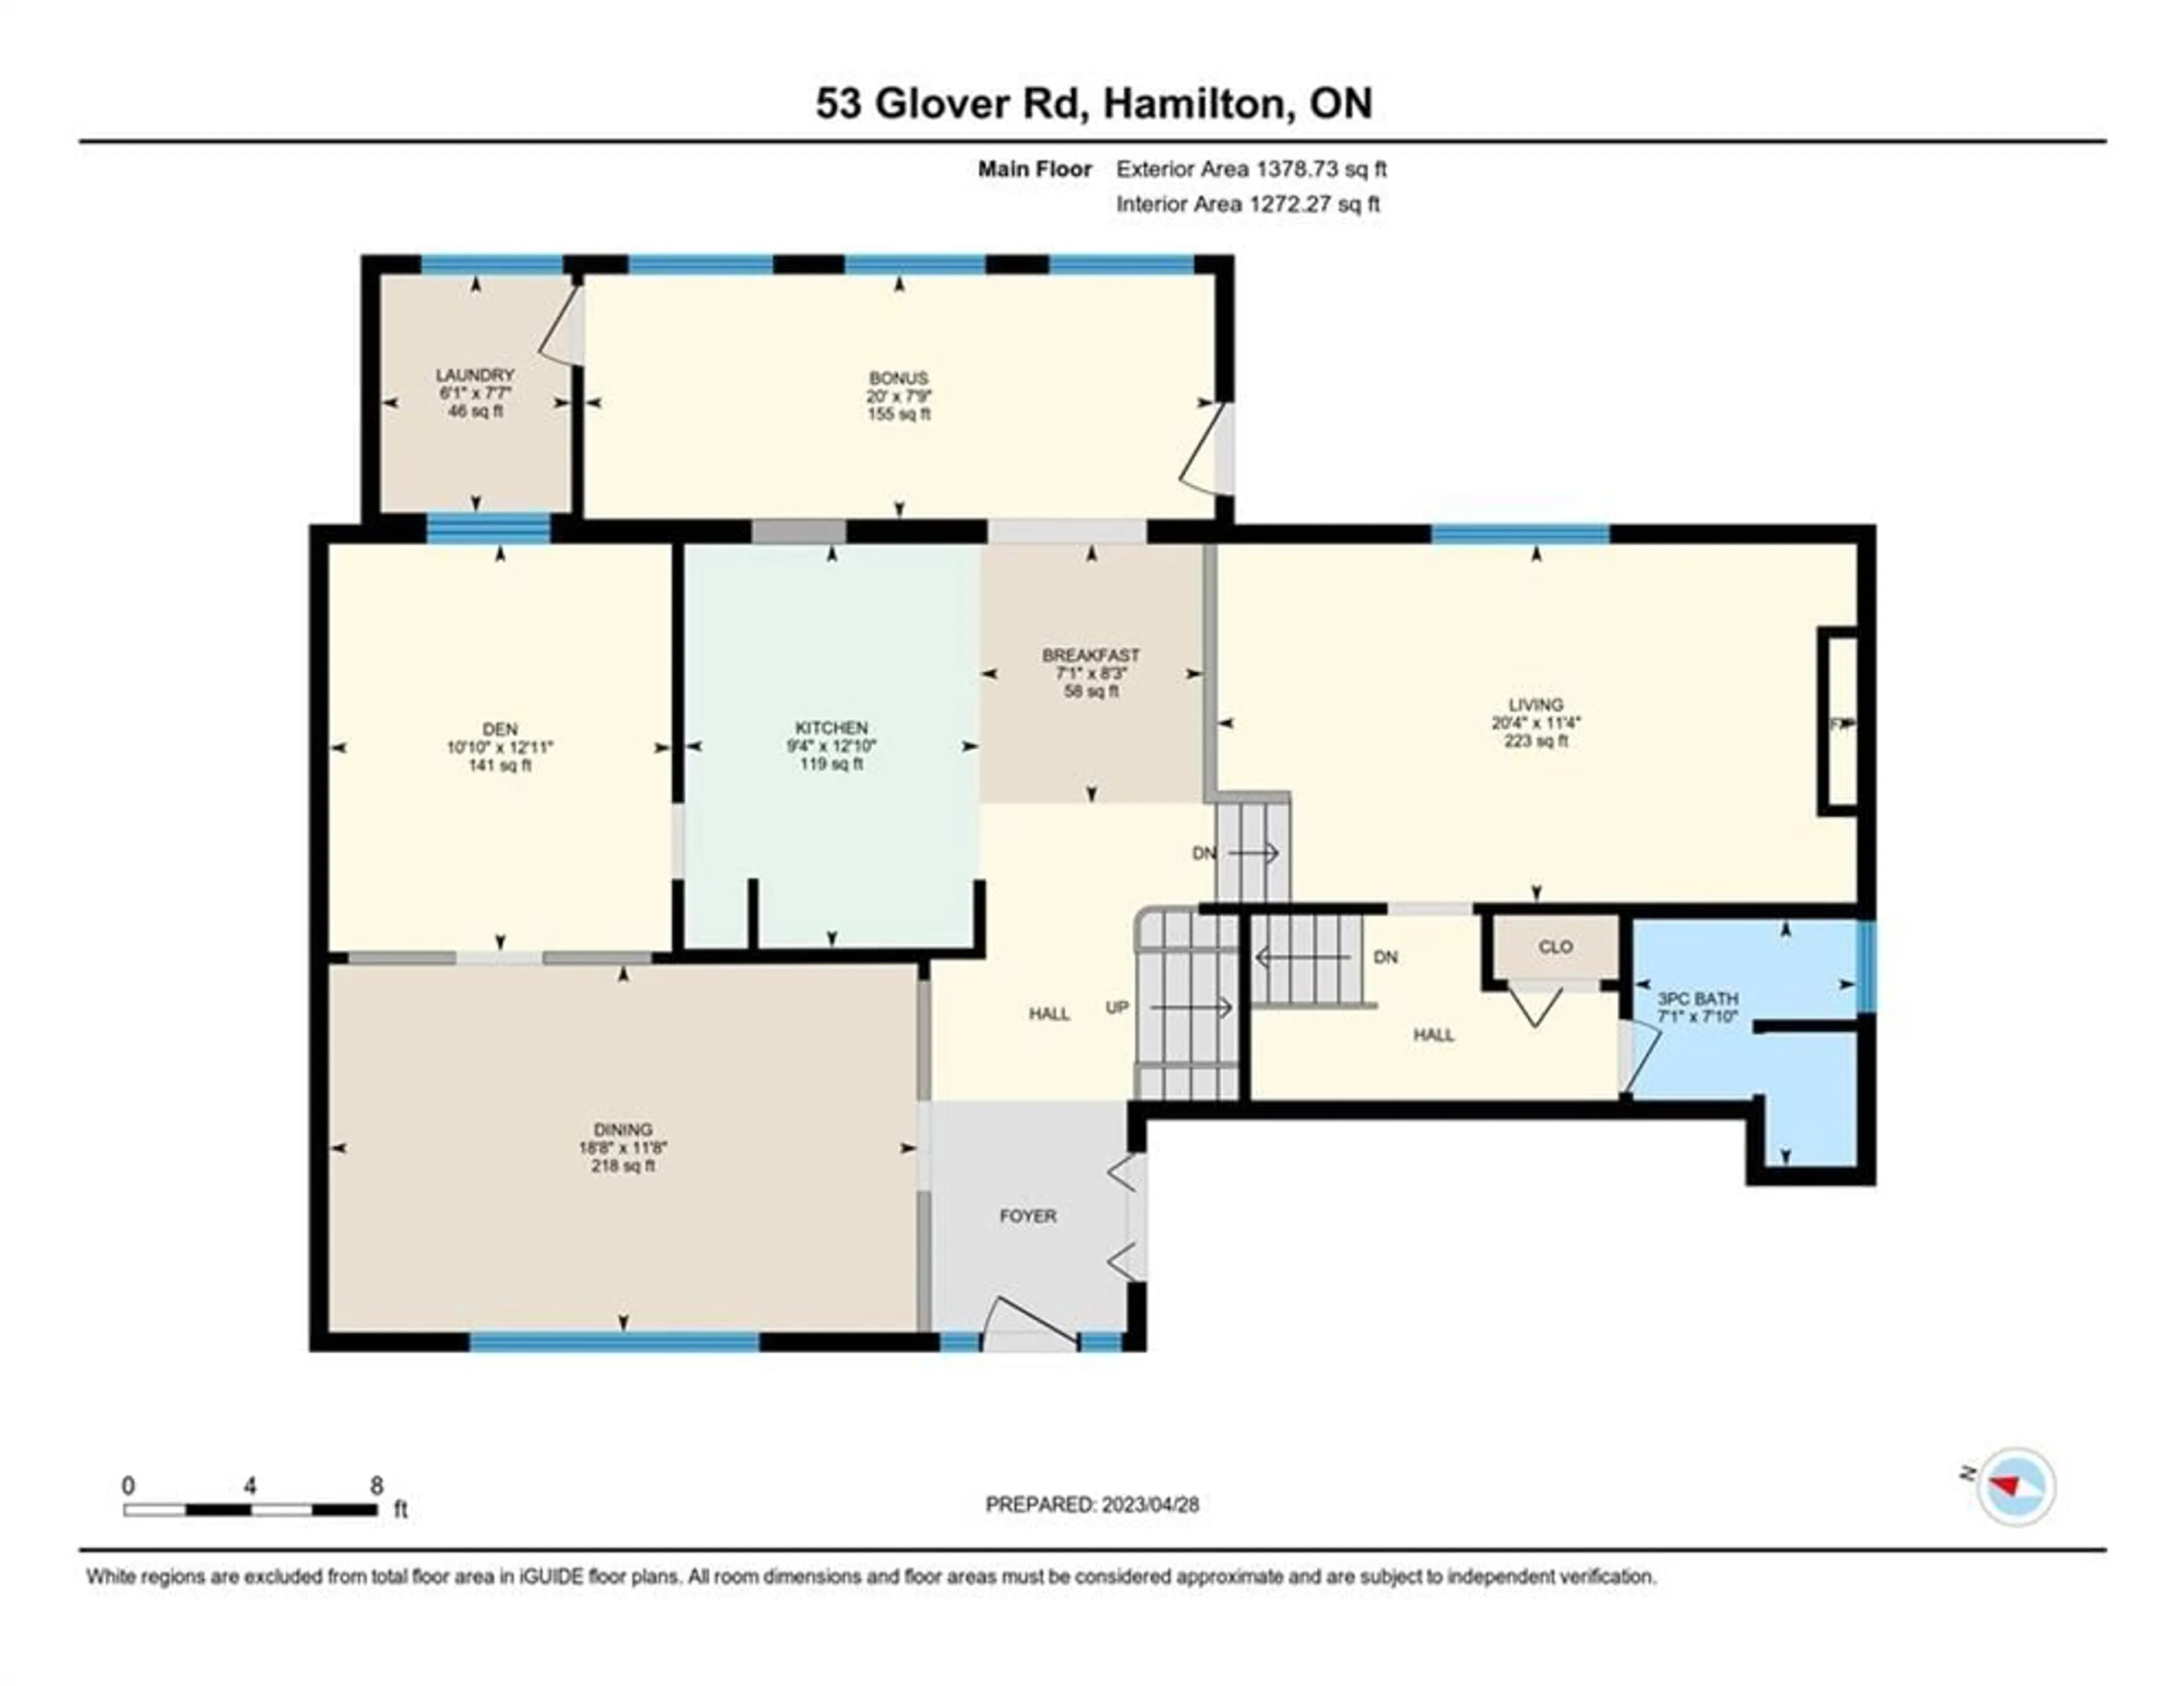 Floor plan for 53 Glover Rd, Hamilton Ontario L8W 3S8